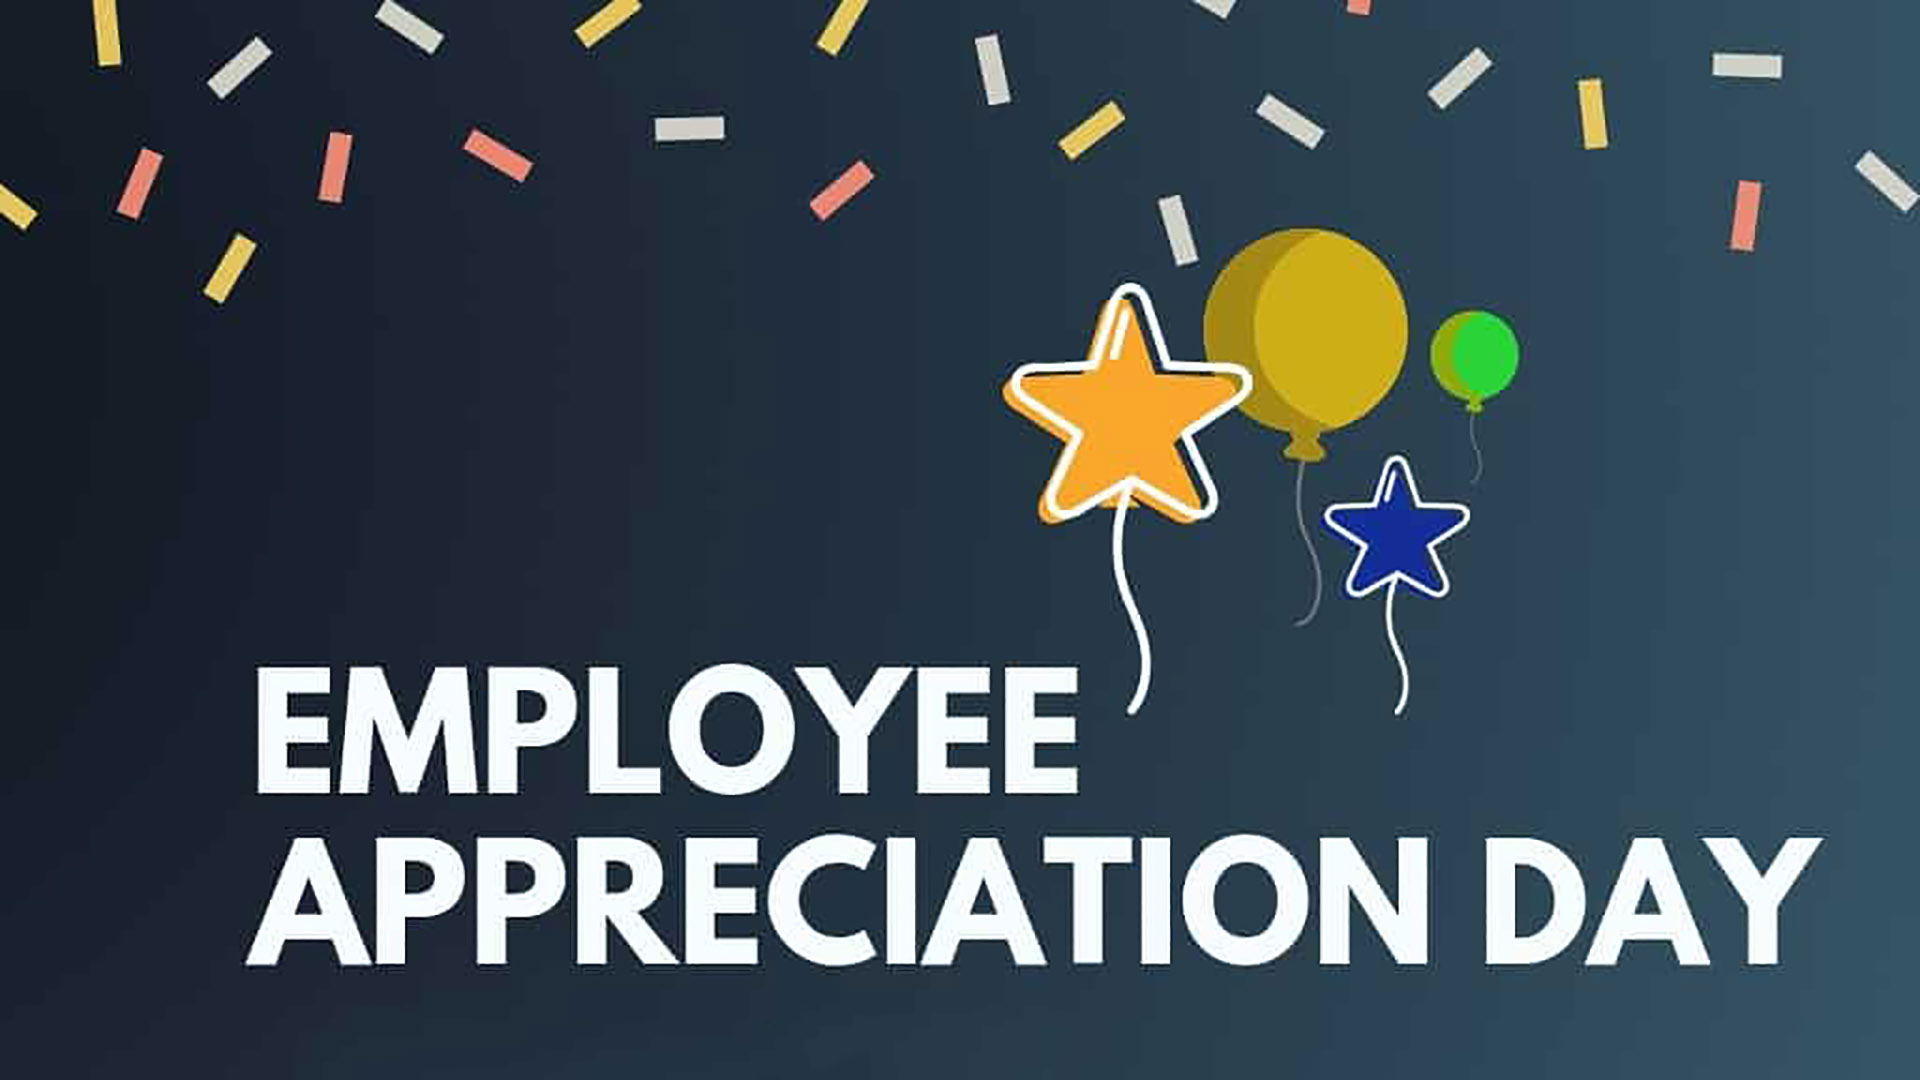 March 5 Employee Appreciation Day Digital Signage Graphic